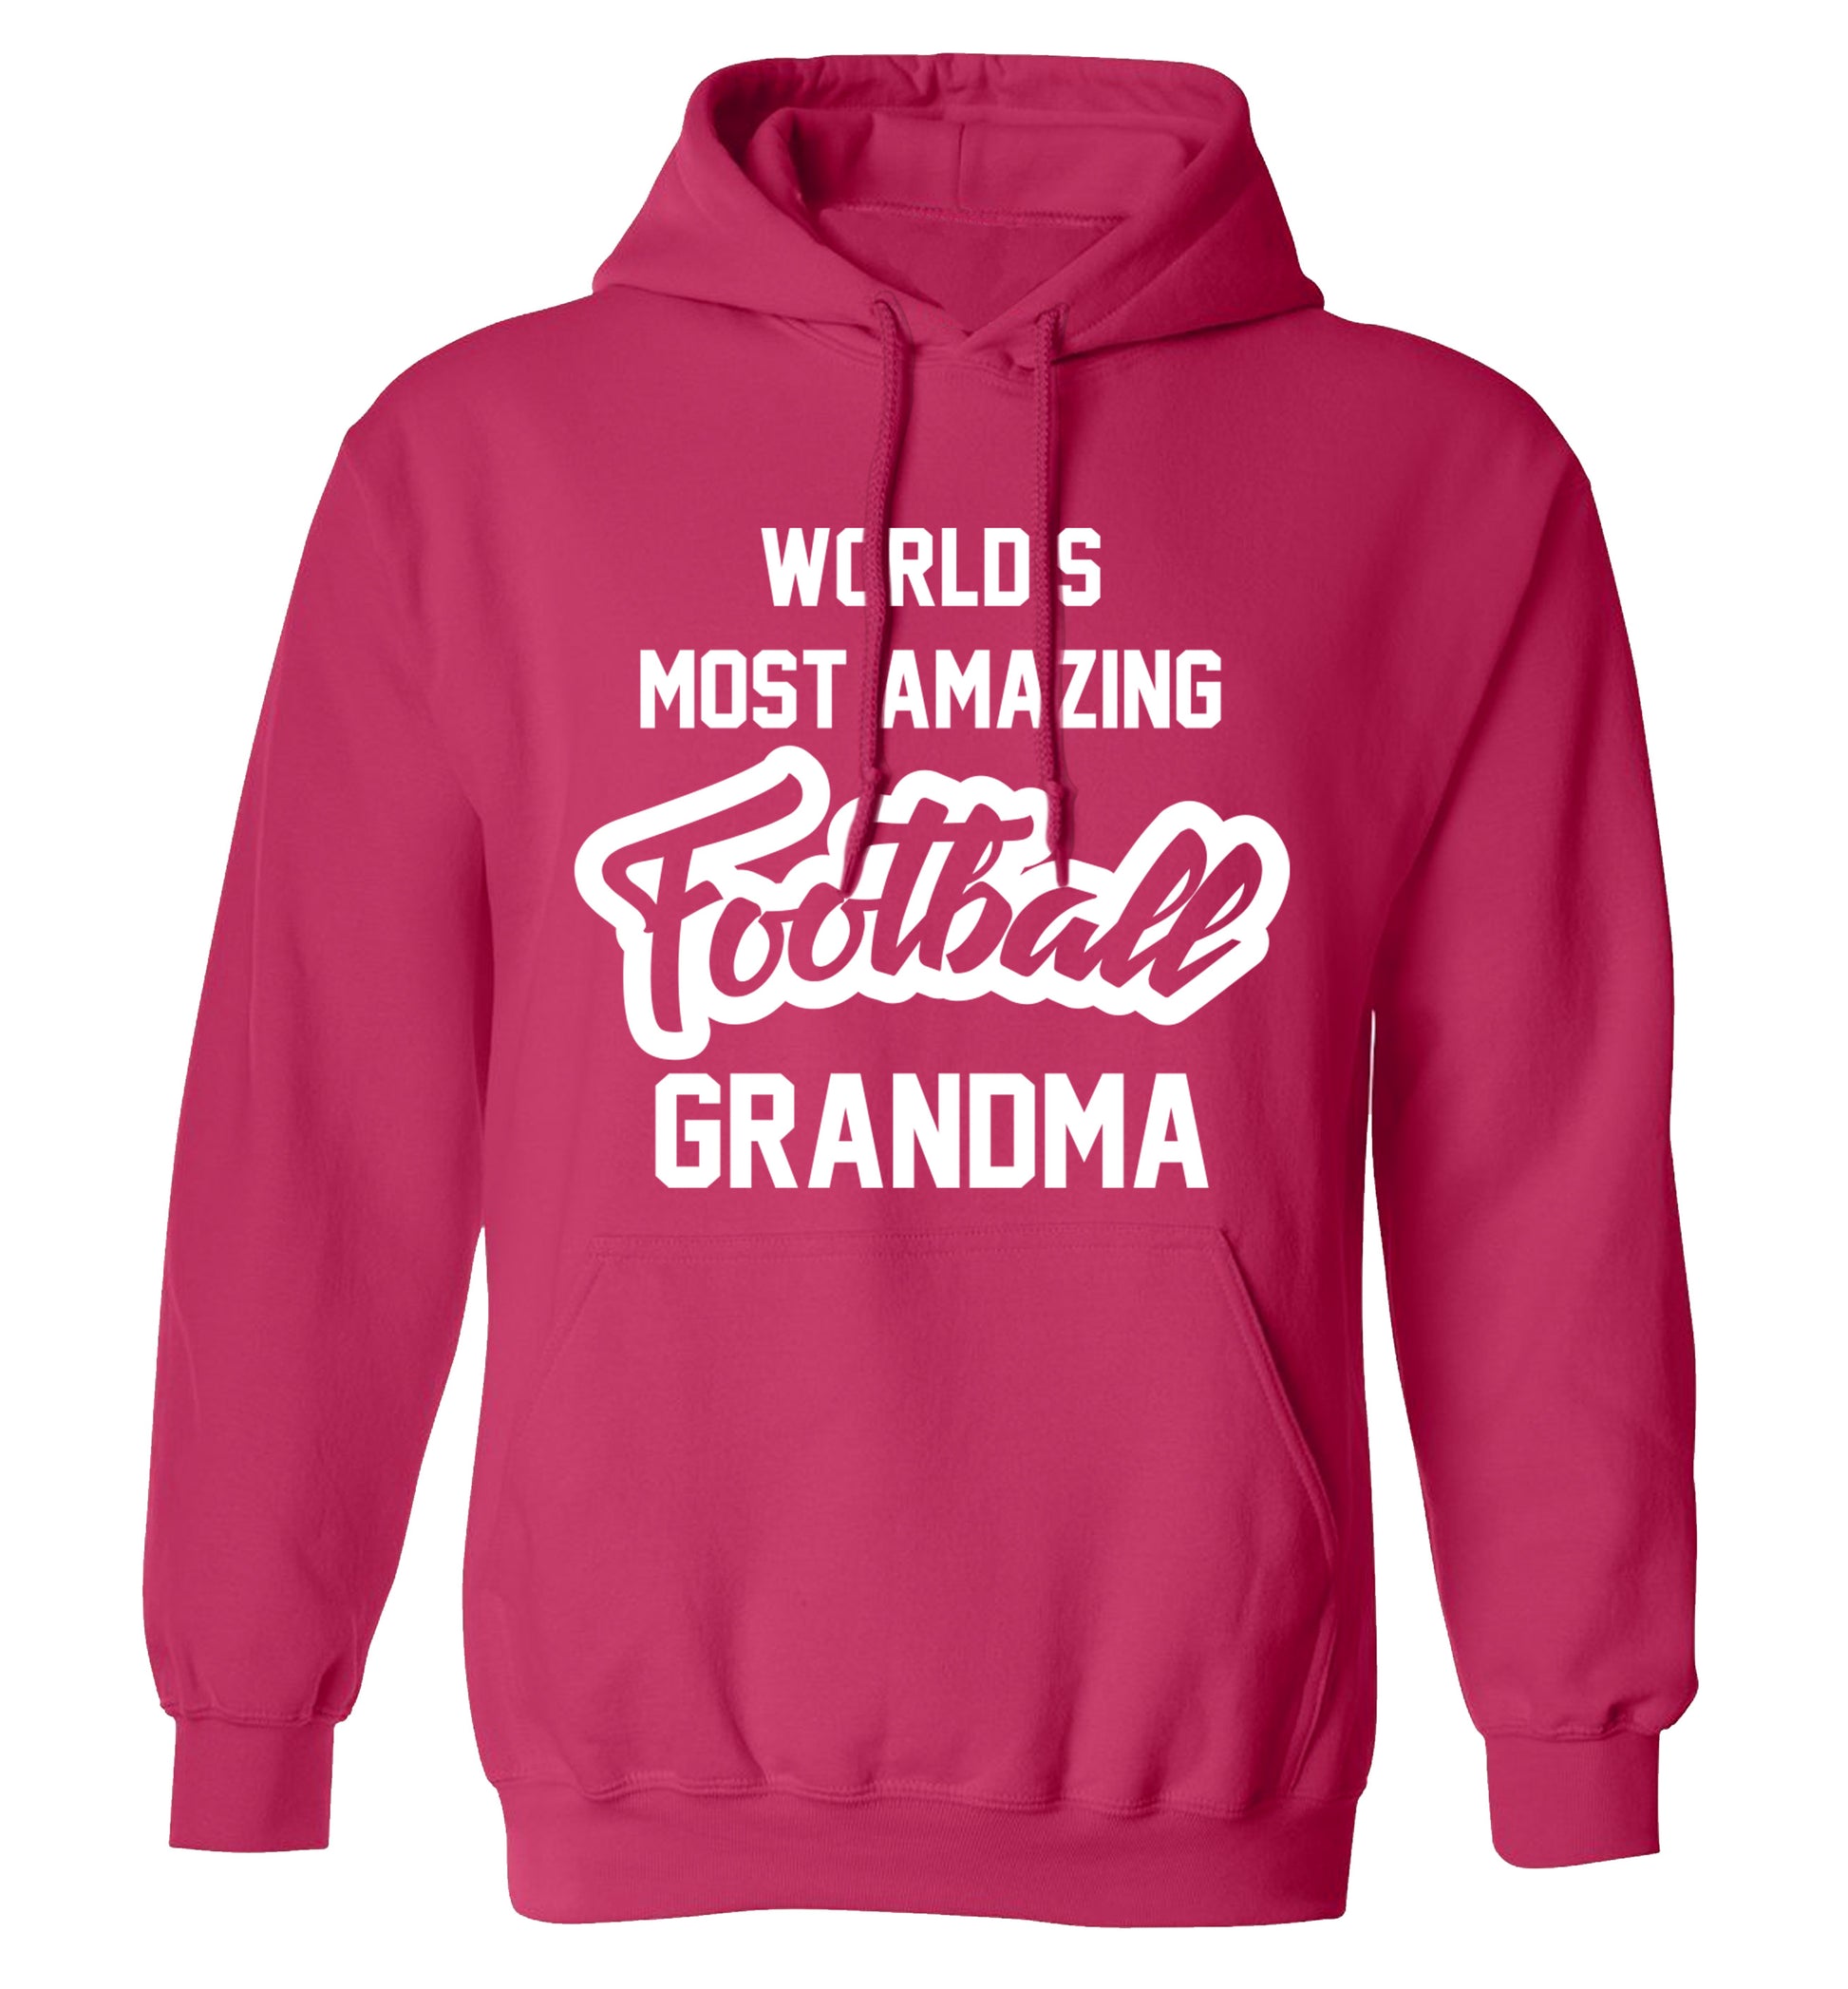 Worlds most amazing football grandma adults unisexpink hoodie 2XL